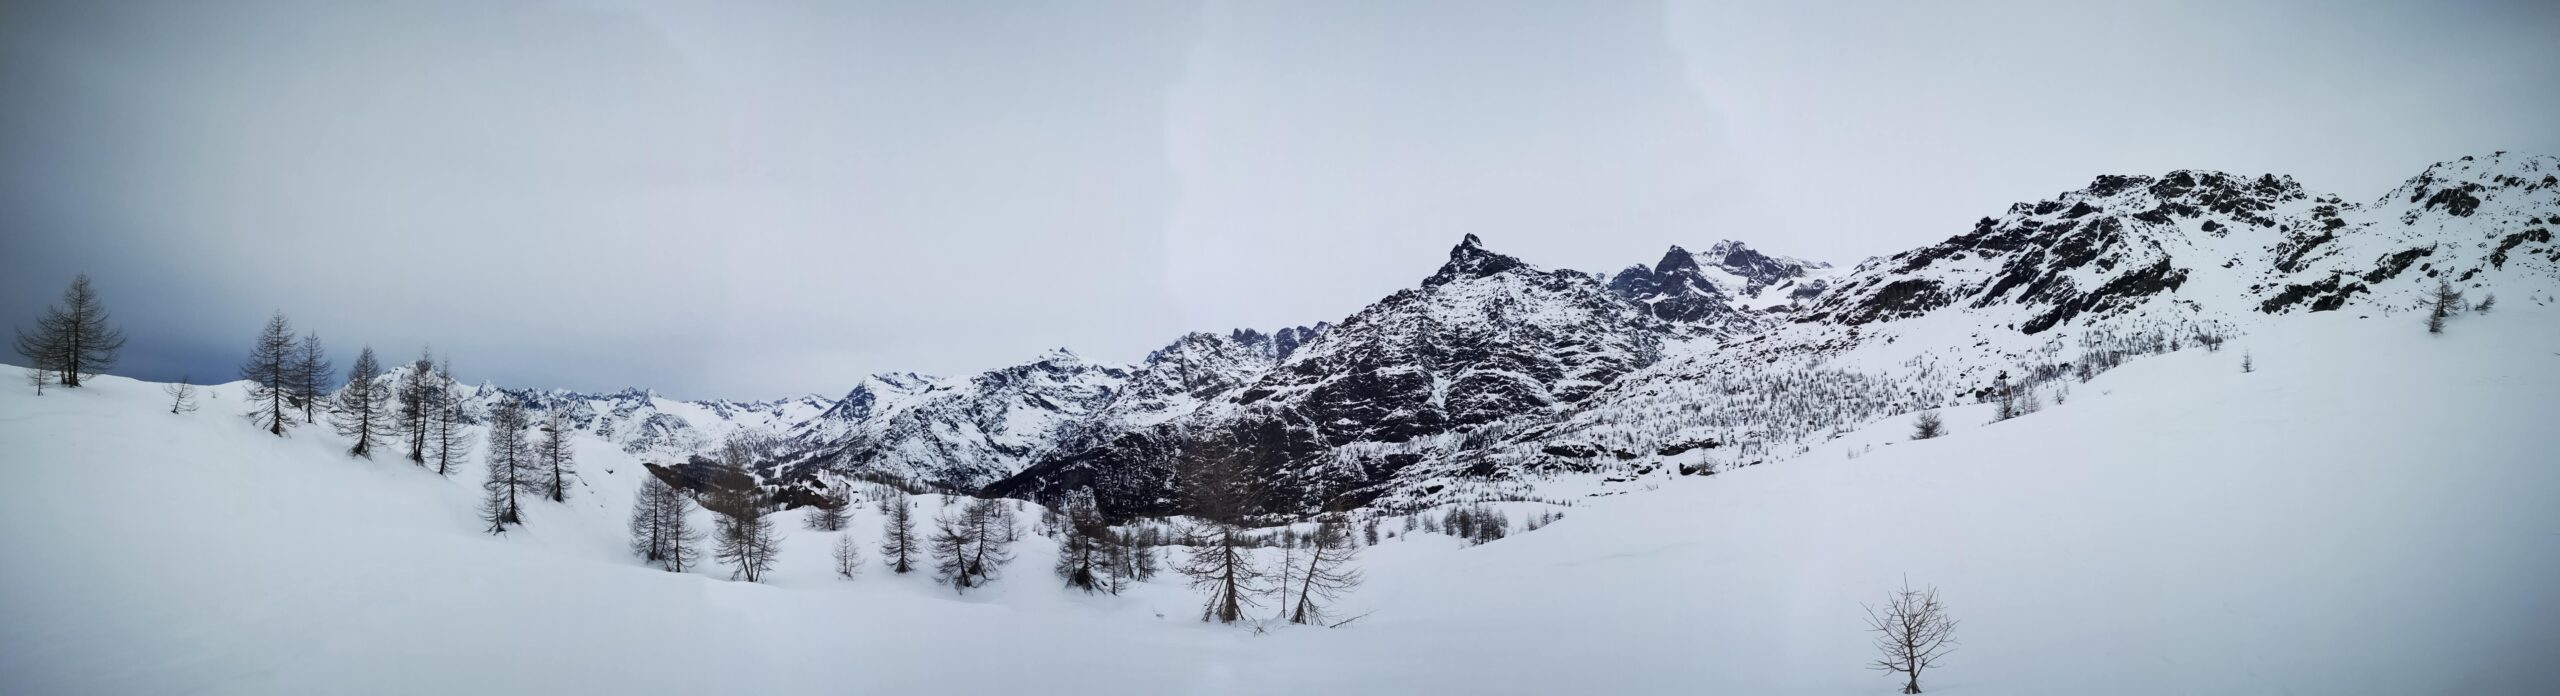 Winter Weekend: Hiking and Skiing in Valtellina